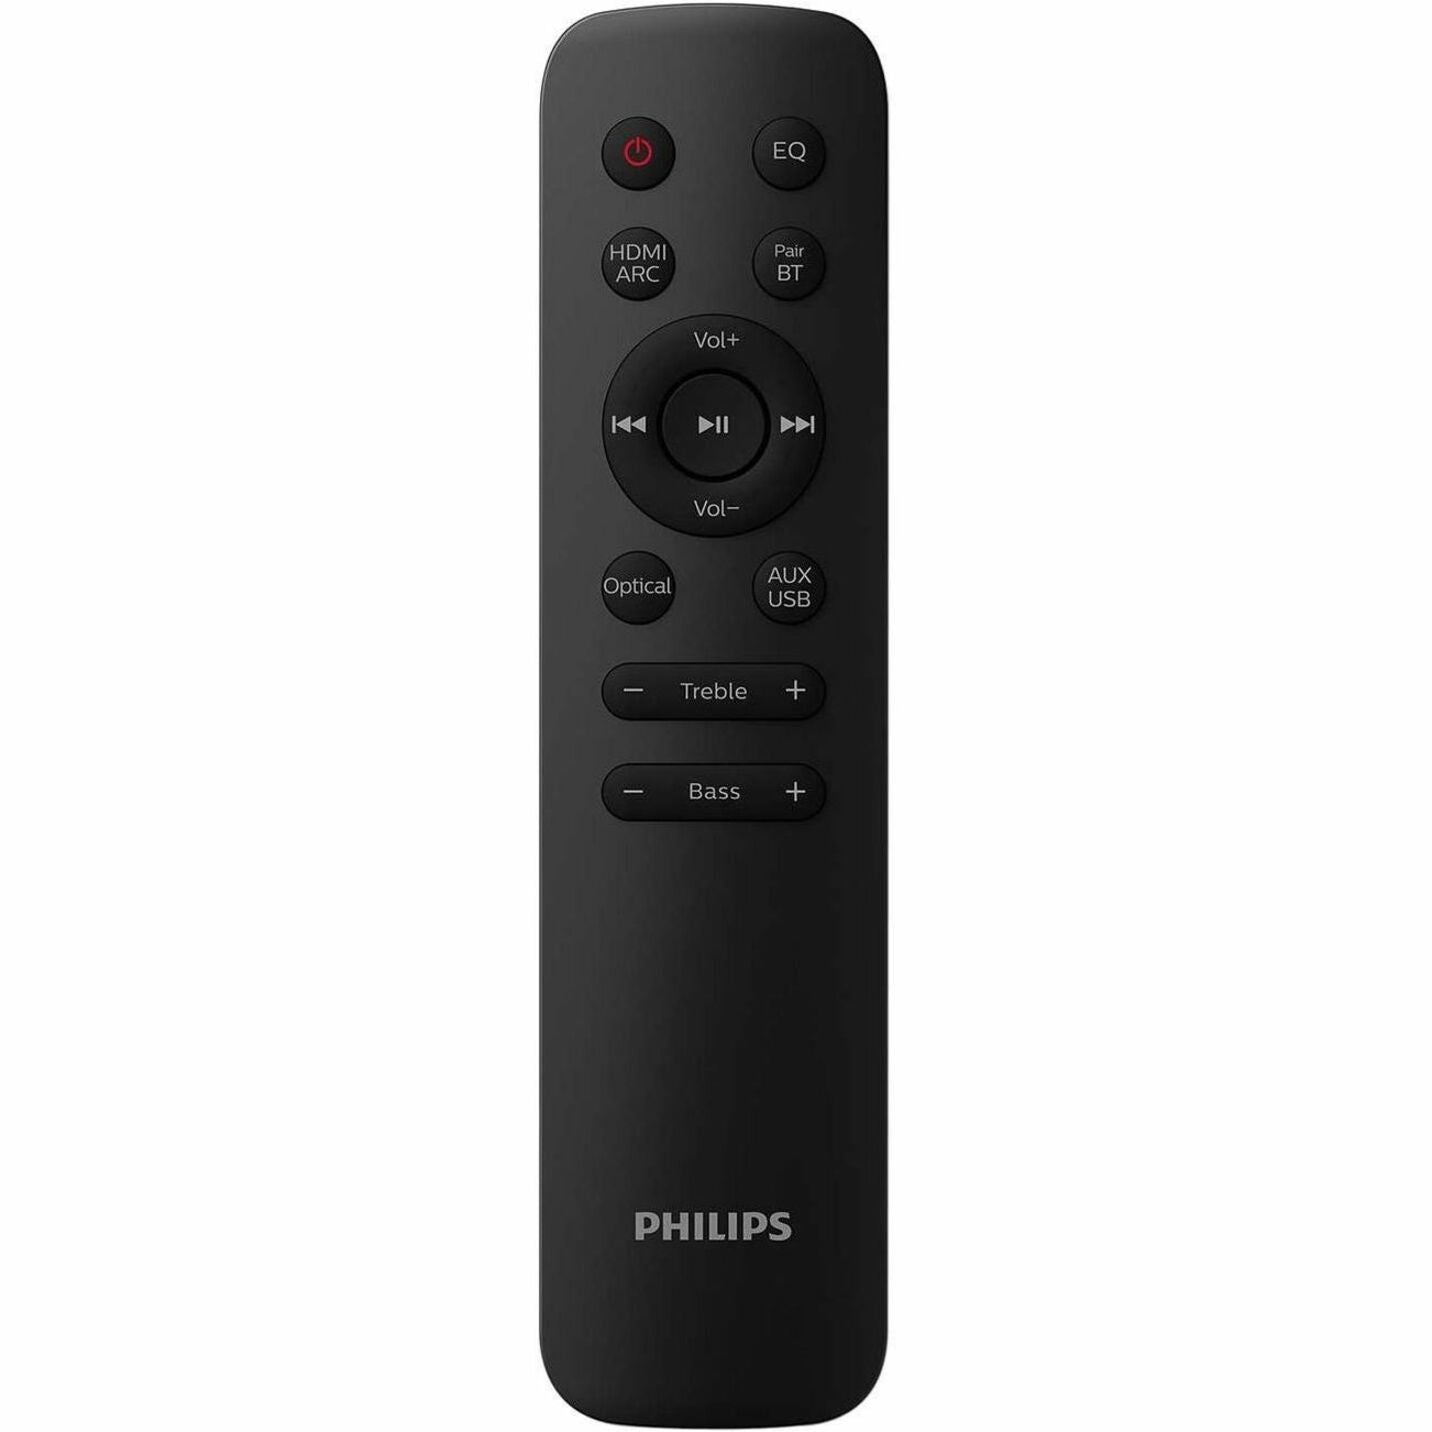 Philips TAB7207/37 Soundbar 2.1 with Wireless Subwoofer, Dolby Digital Plus, 260W RMS Output Power, HDMI, USB, Bluetooth